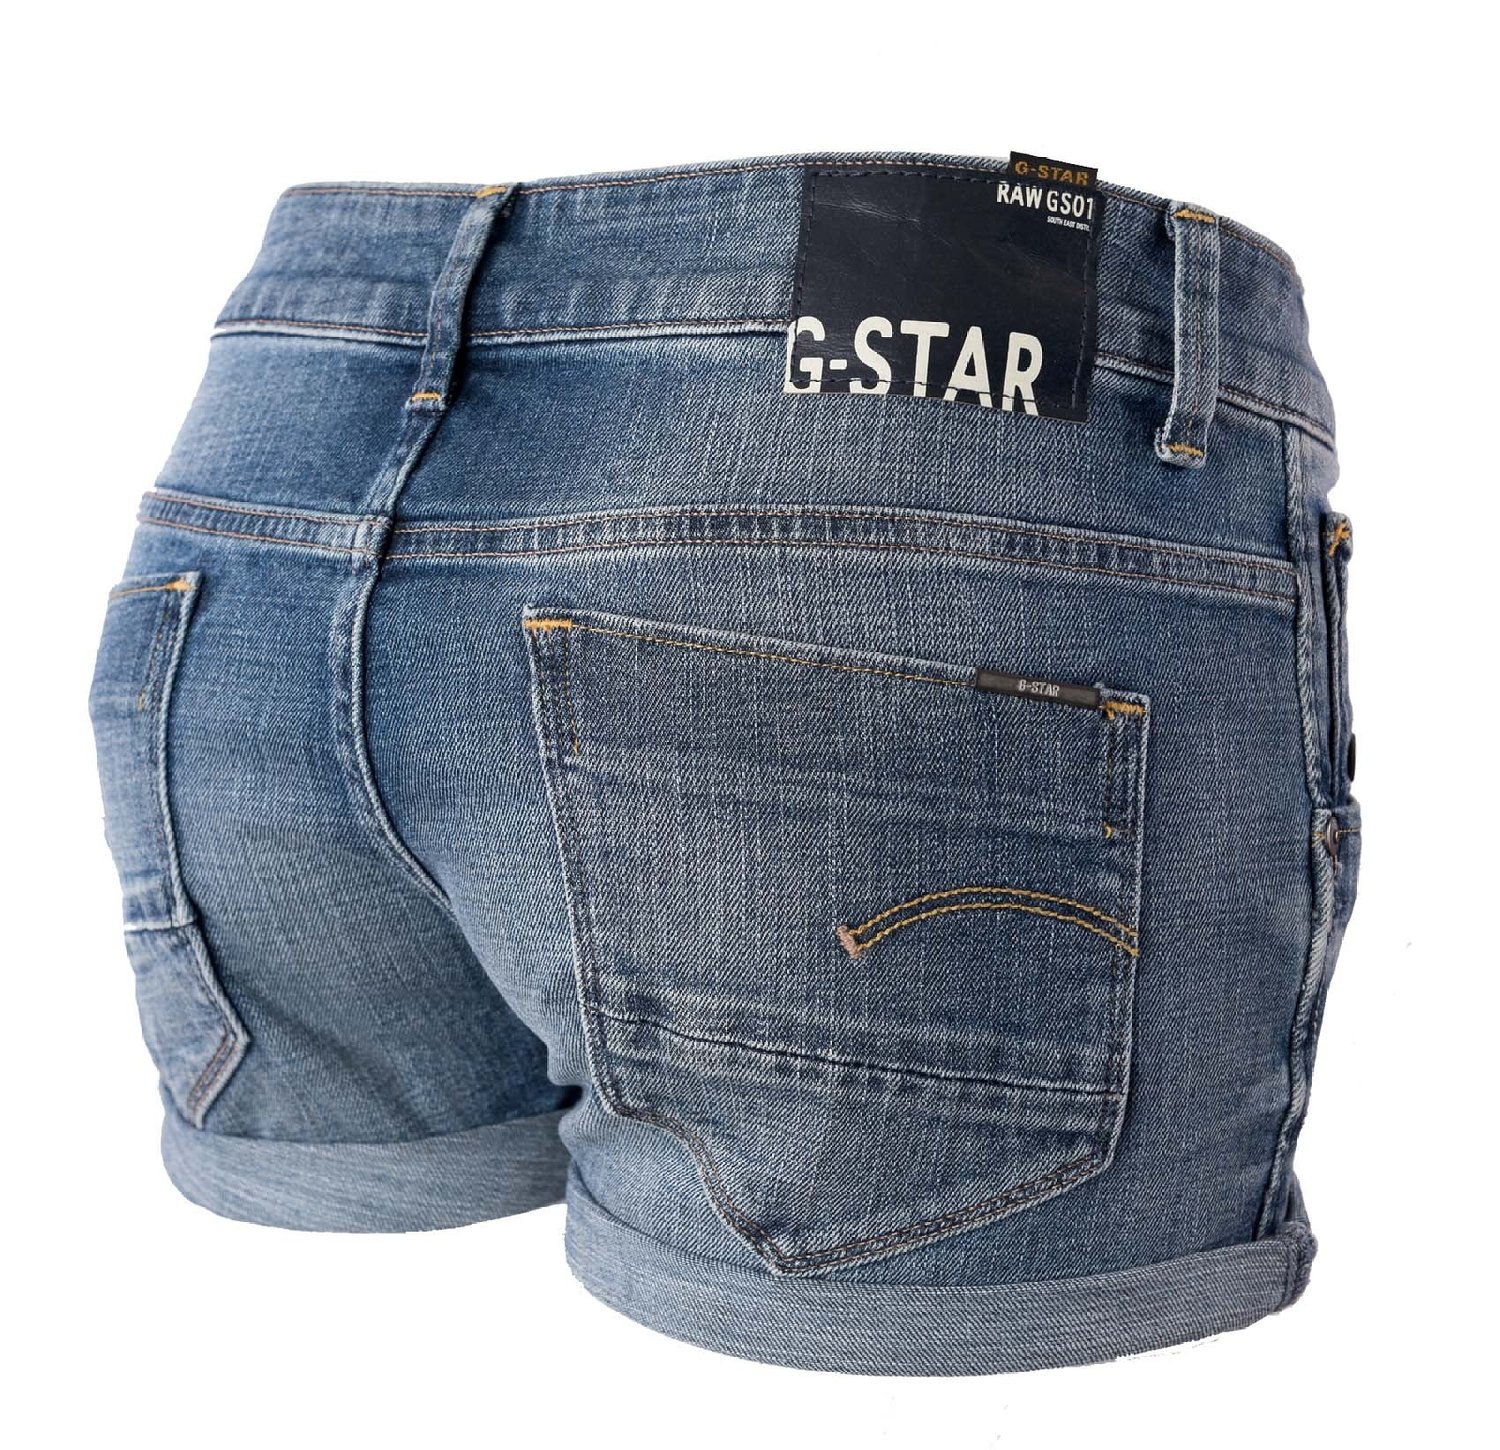 G-star-raw Women Shorts Button Front Jean Arc Btn Gs01